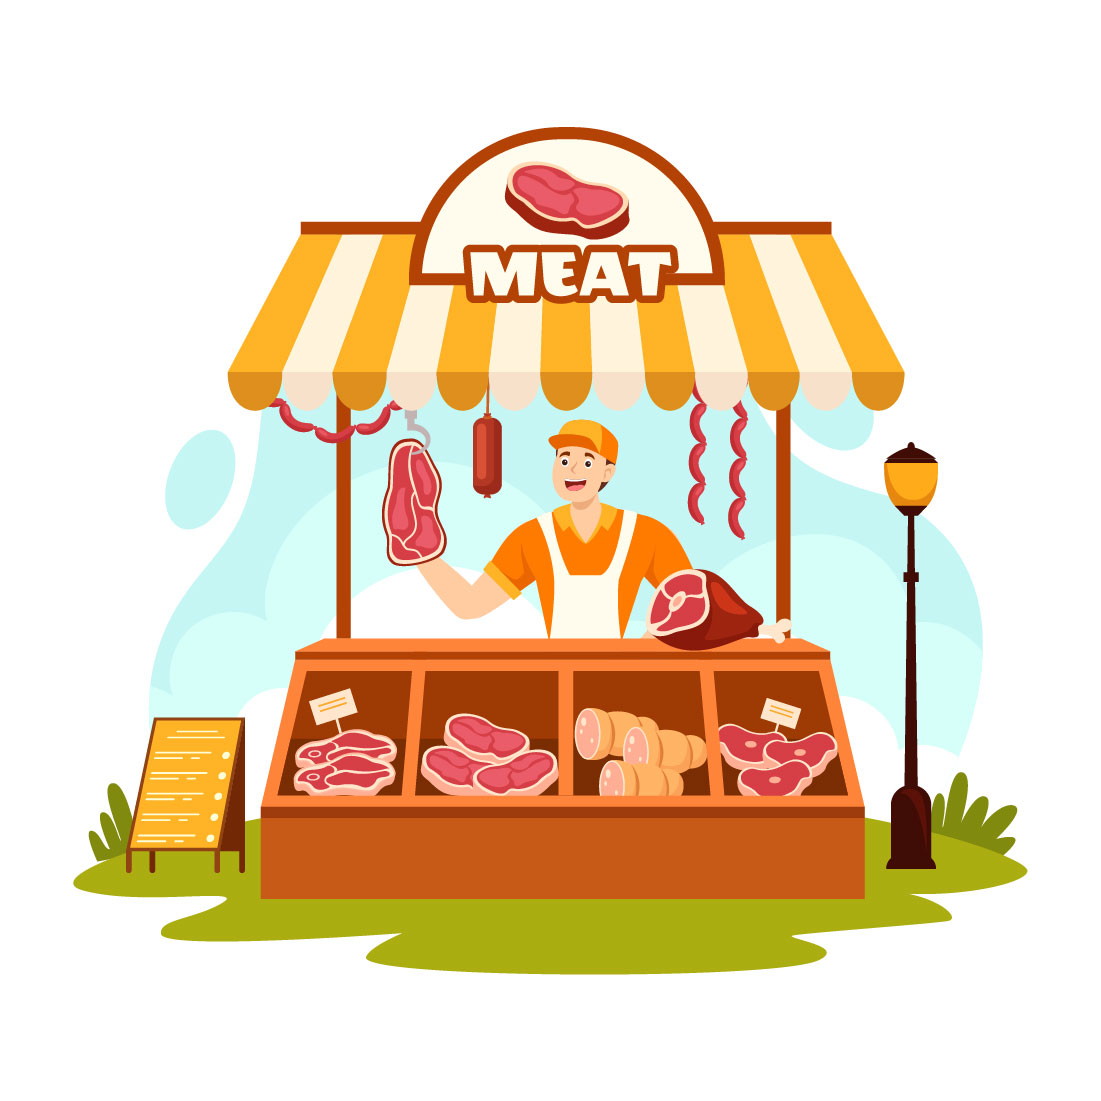 12 Meat Shop Vector Illustration cover image.